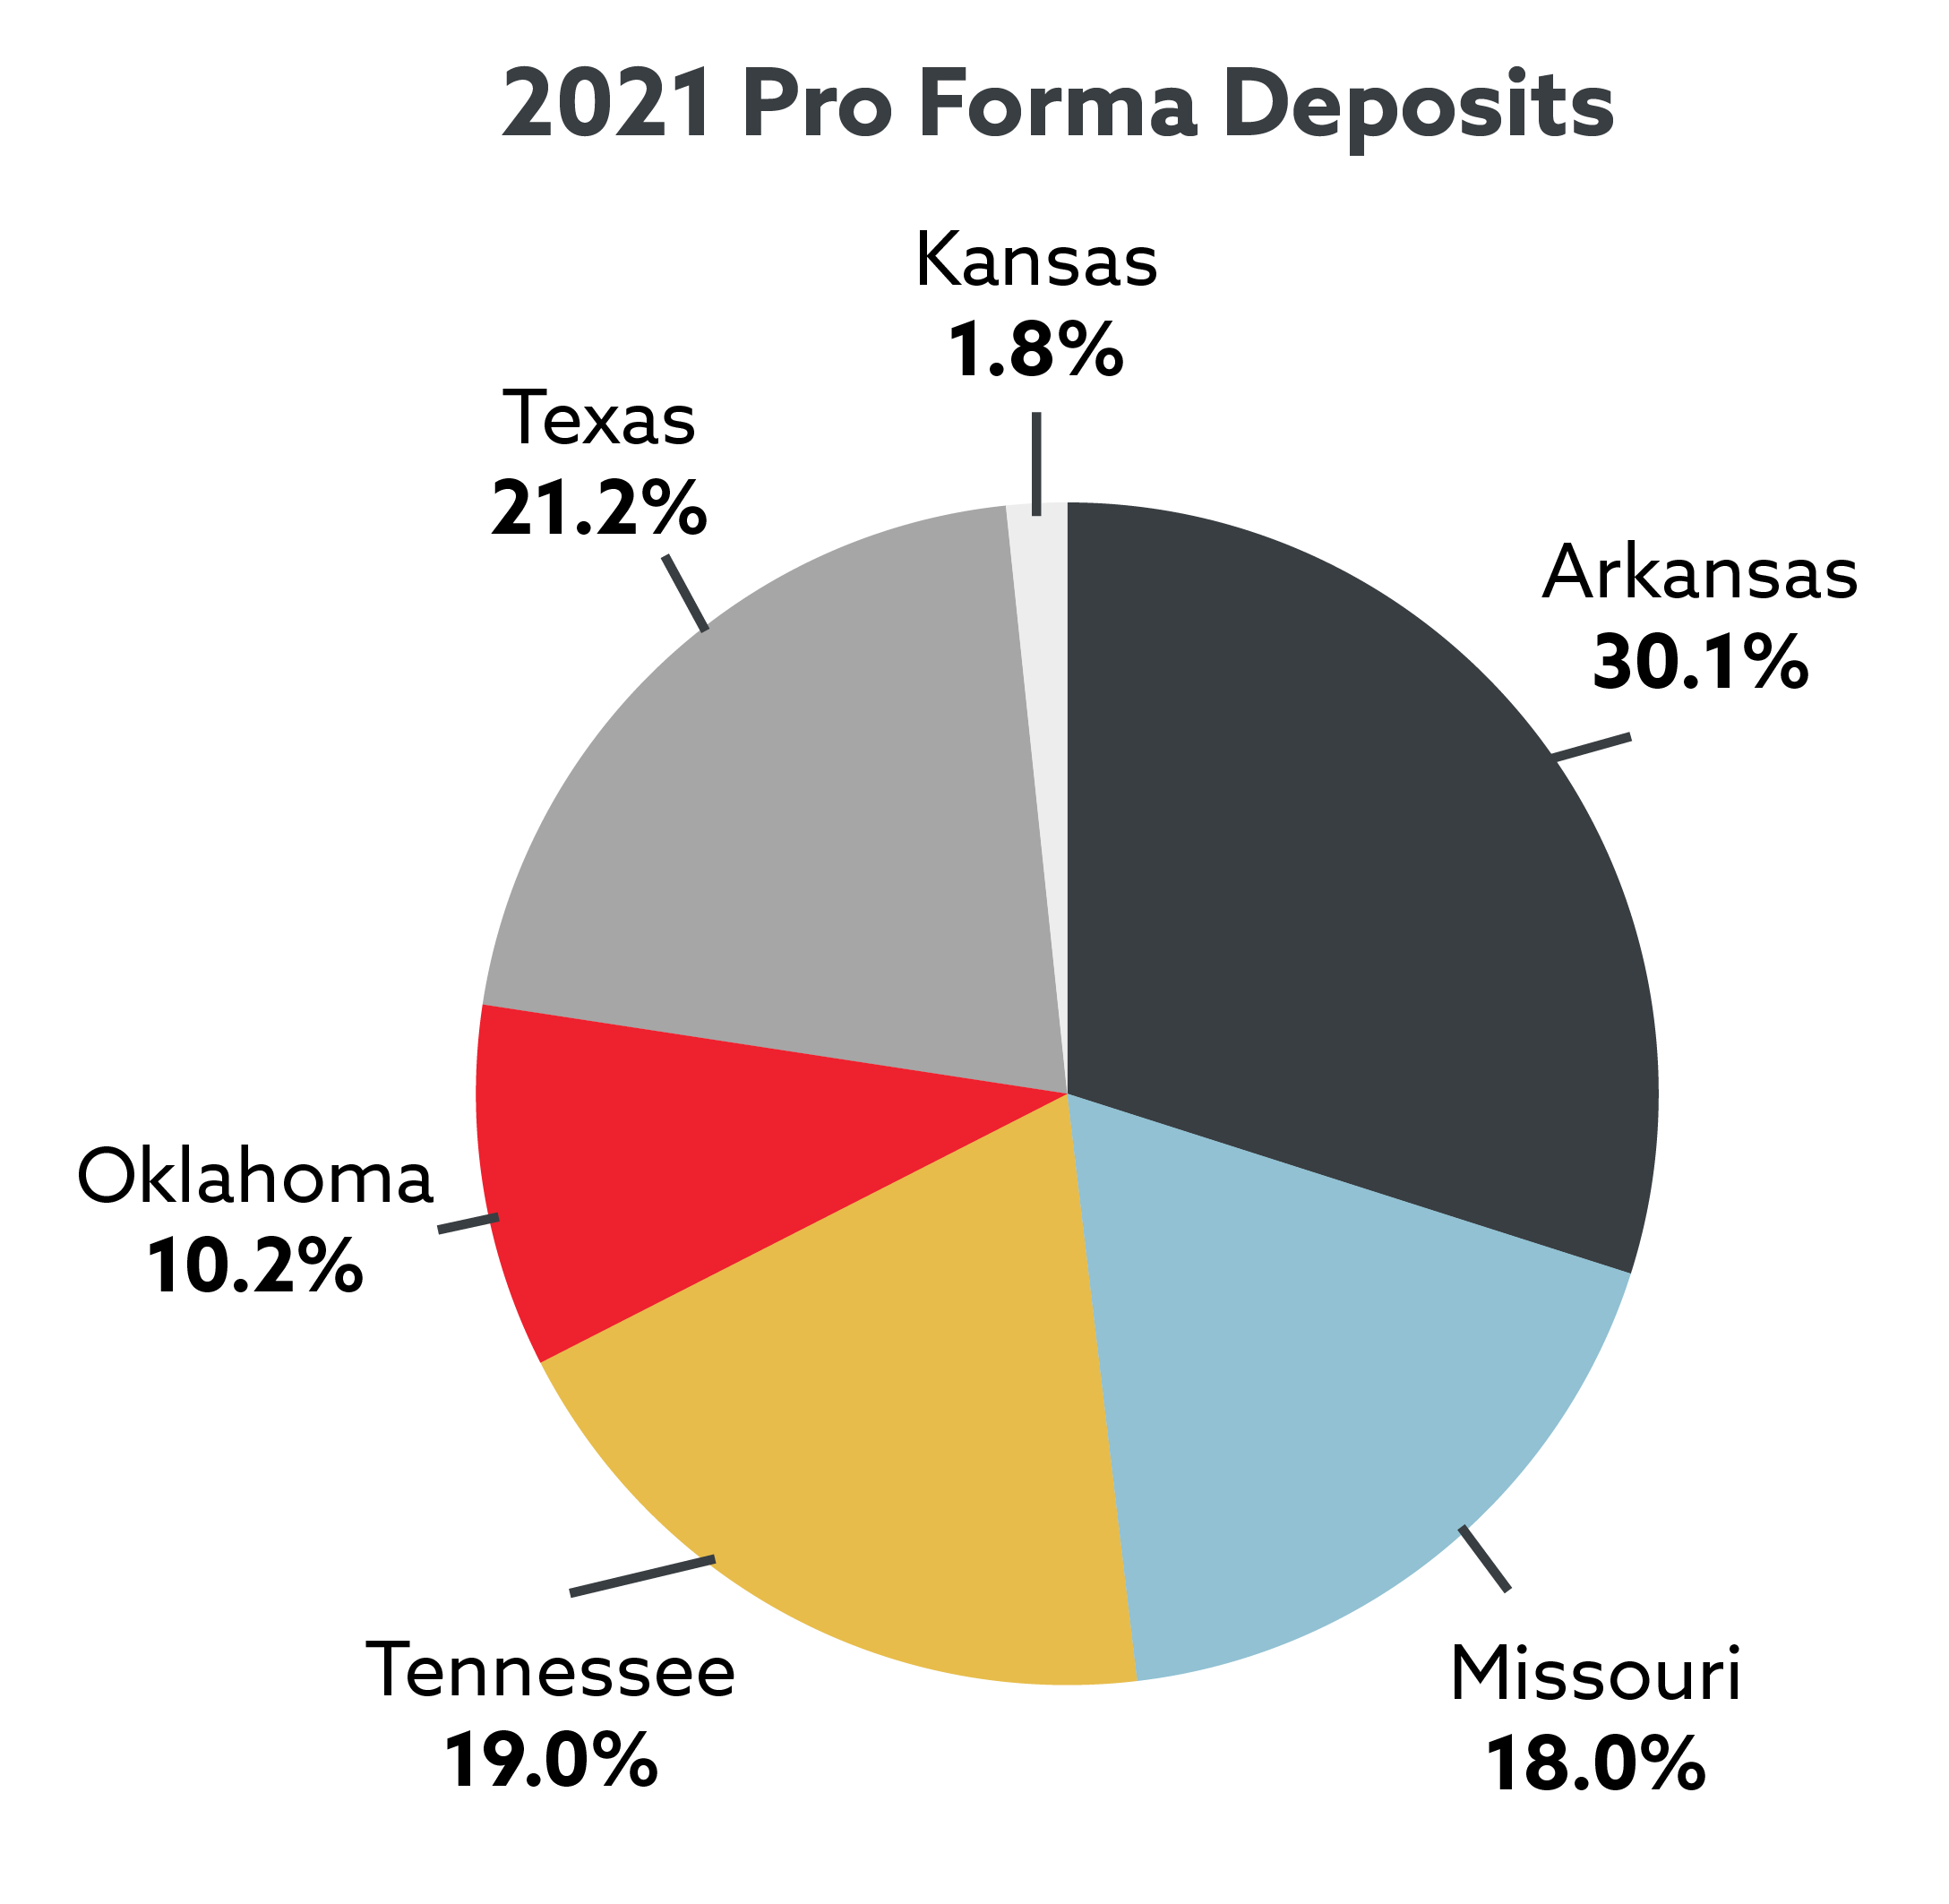 2021 Pro Forma Deposits